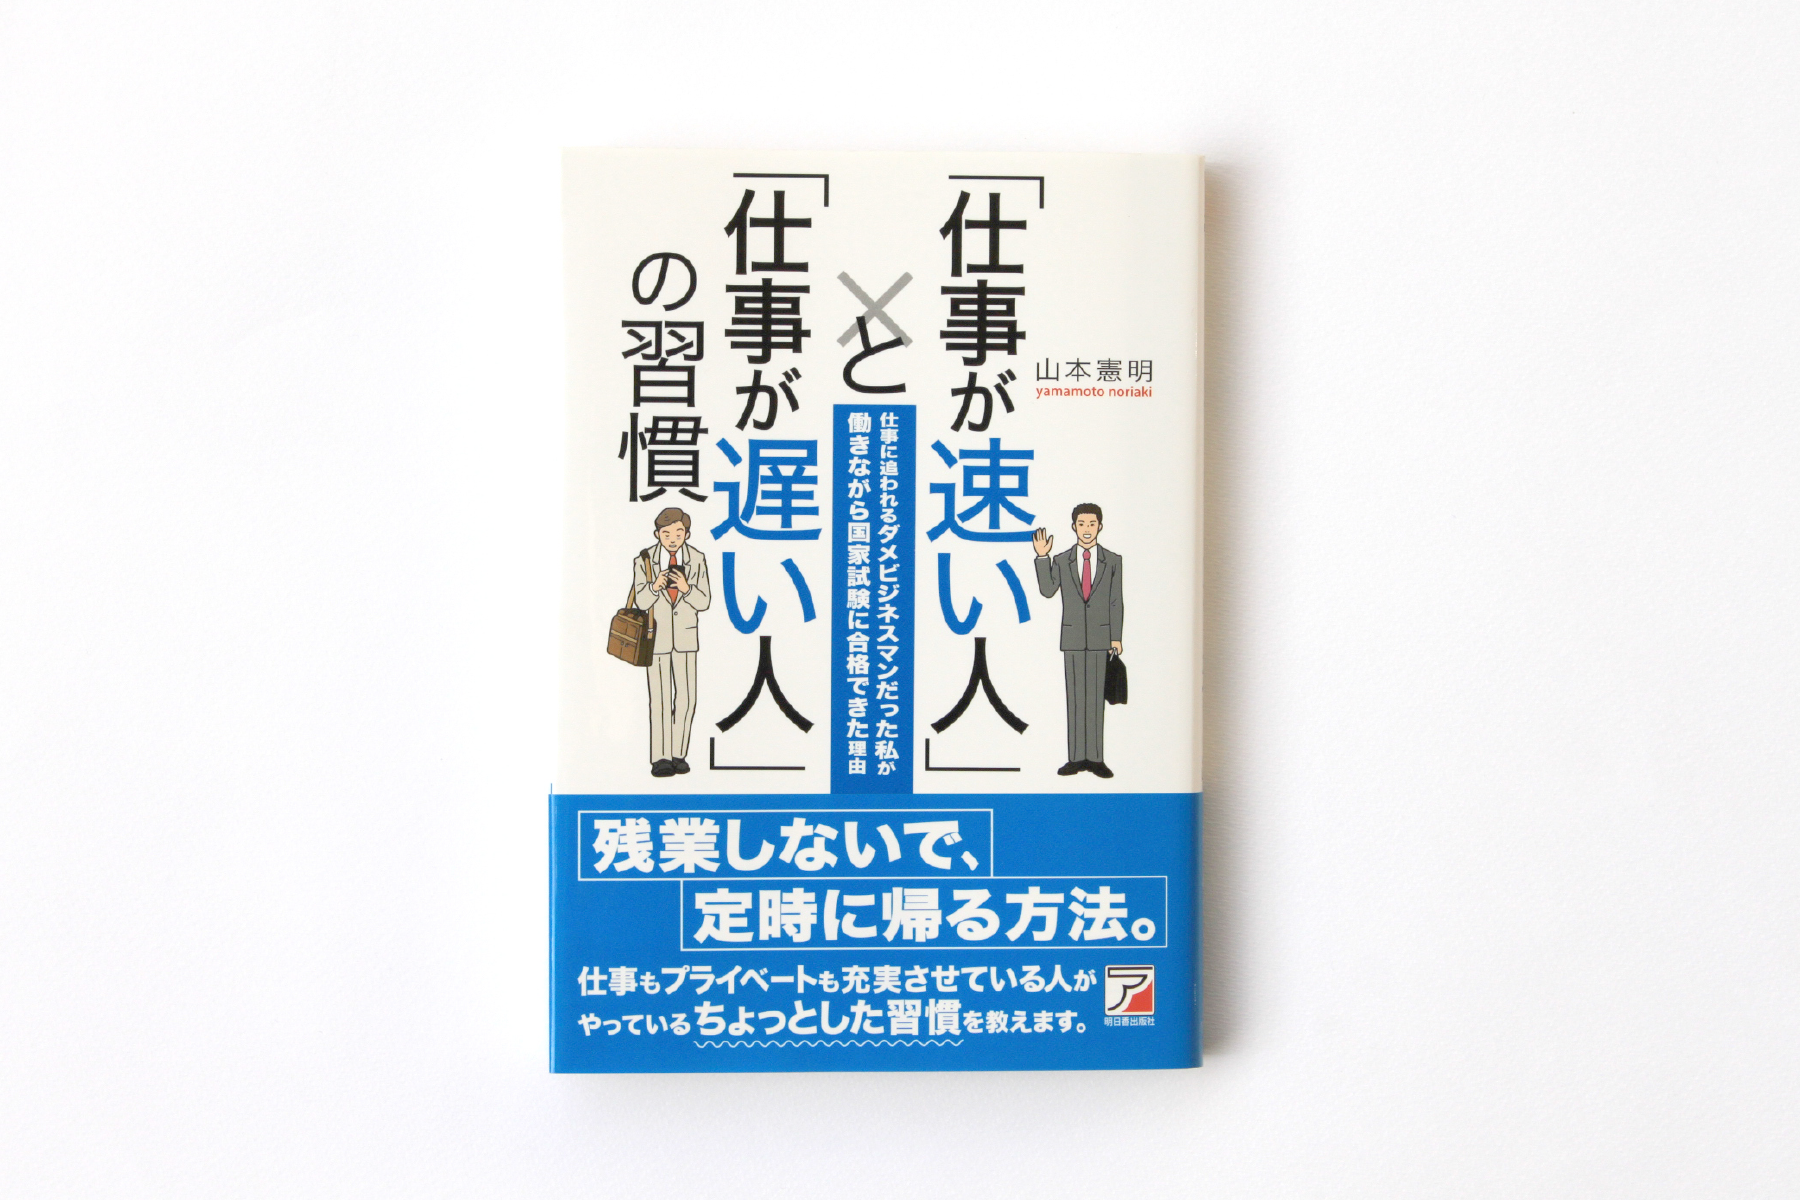 Book design “ASUKA publication Business book”